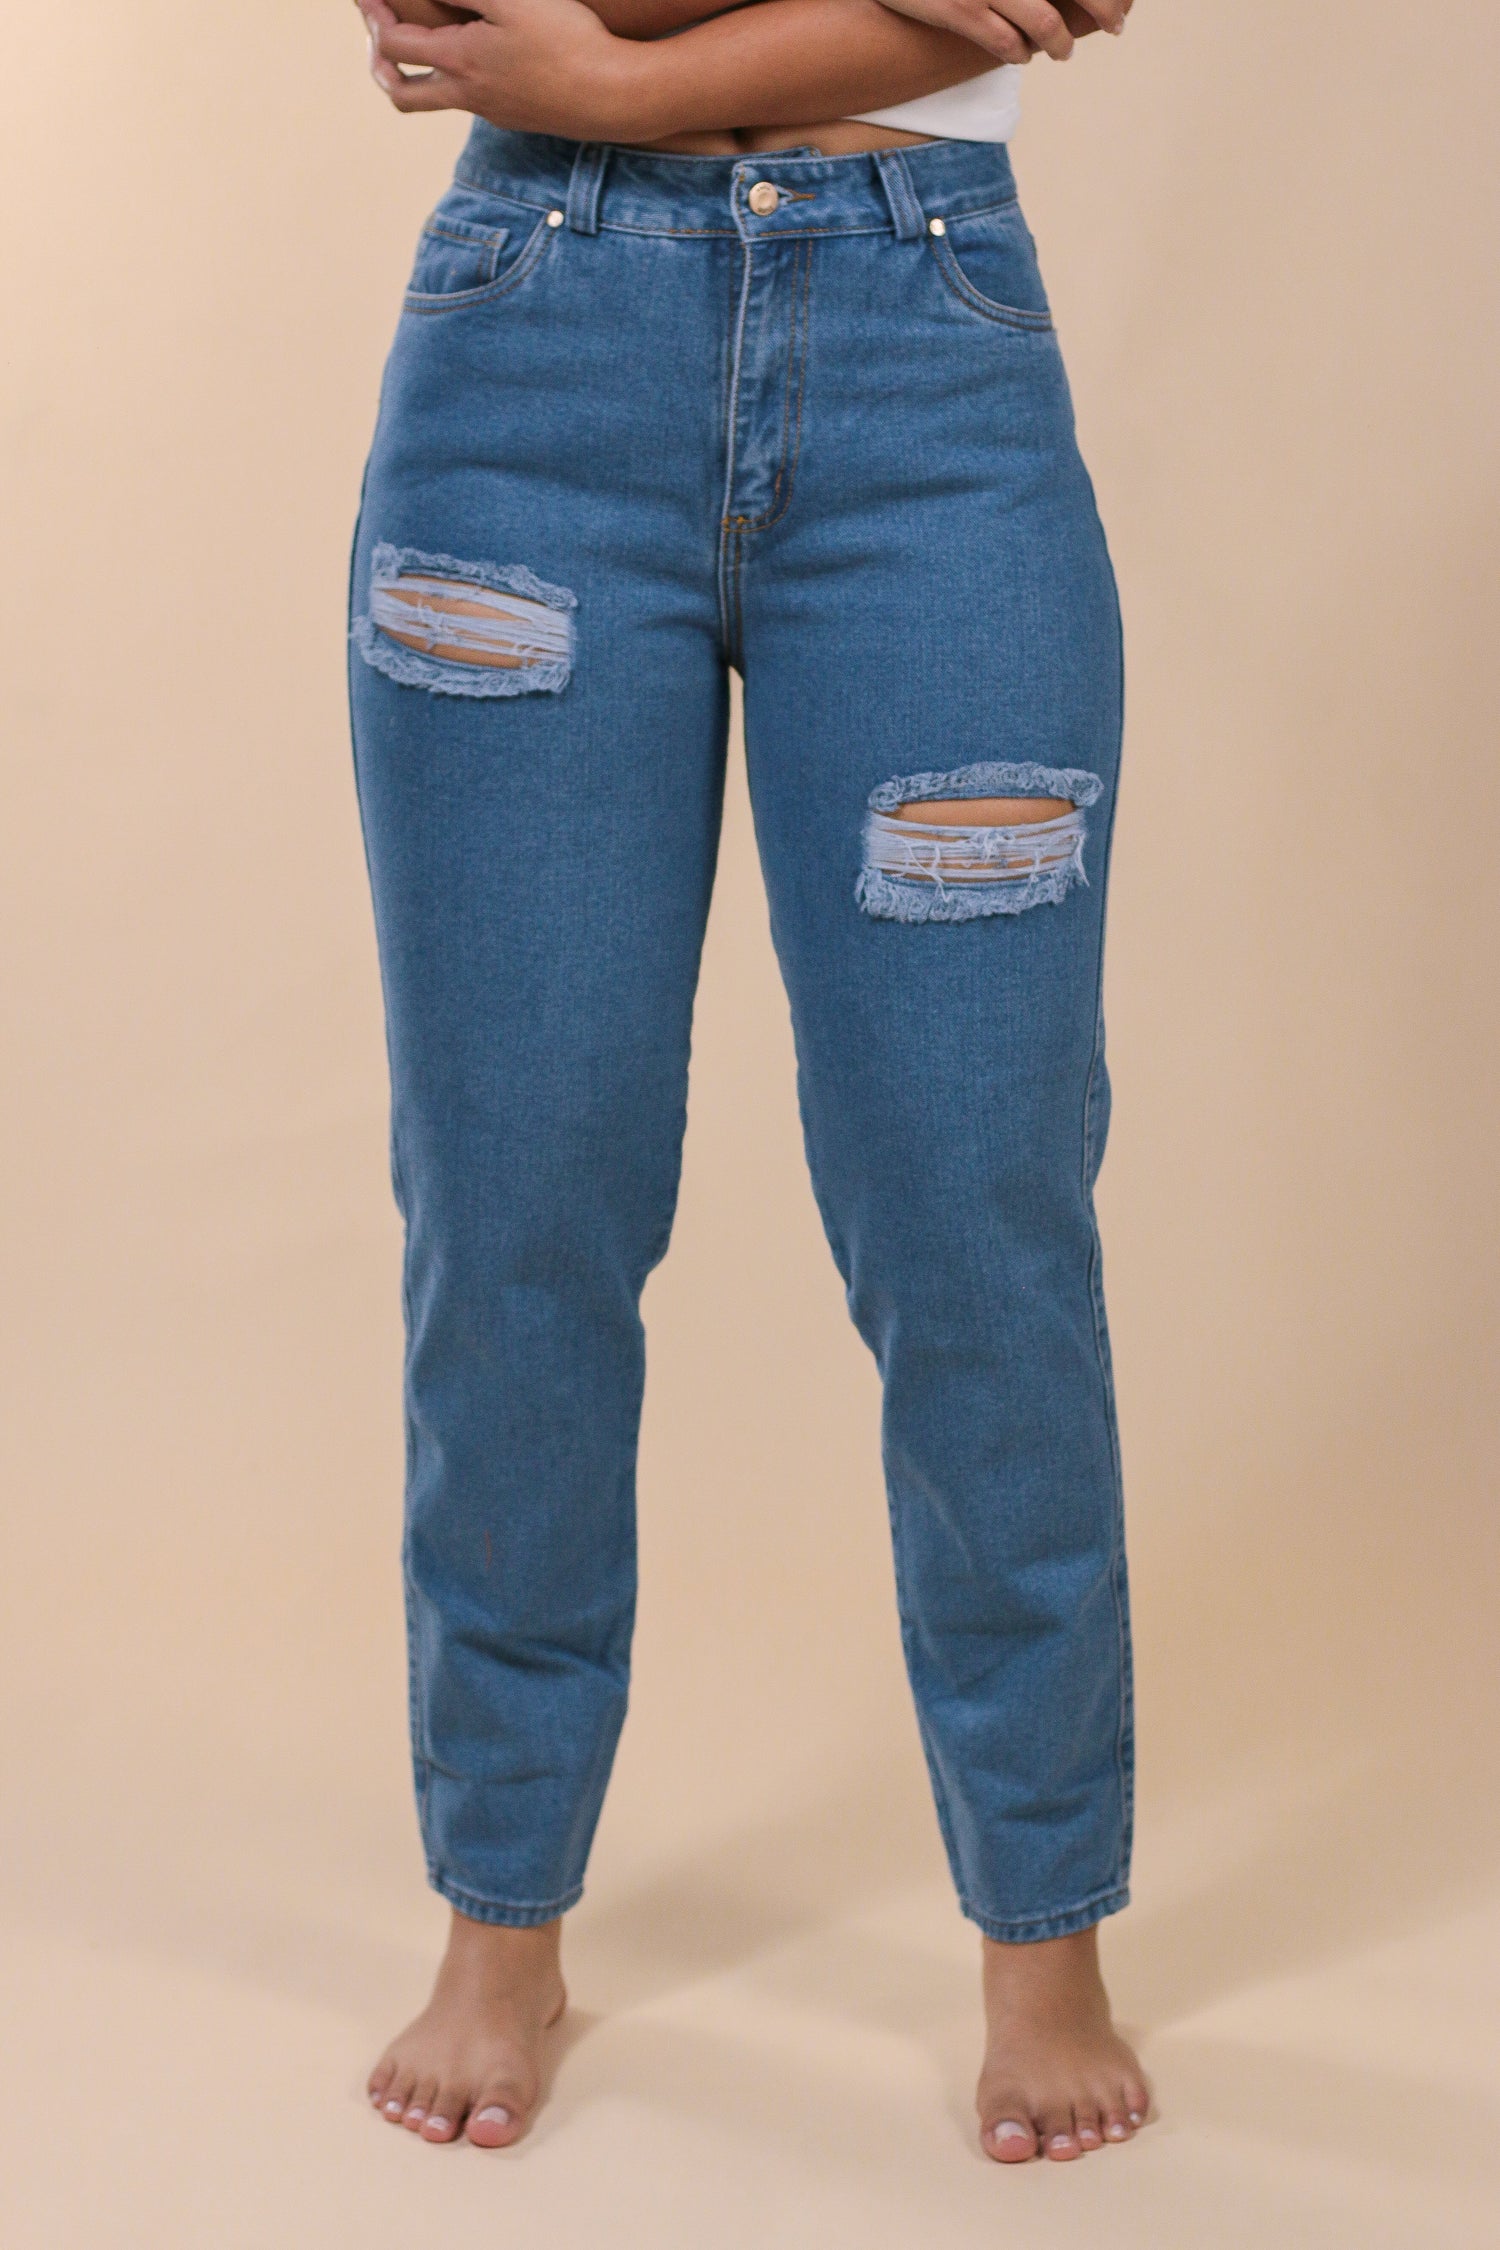 Jeans Mujer Mom Fit Destroyer Moda Casual Mezclilla Azul azul 13 Incógnita  110099